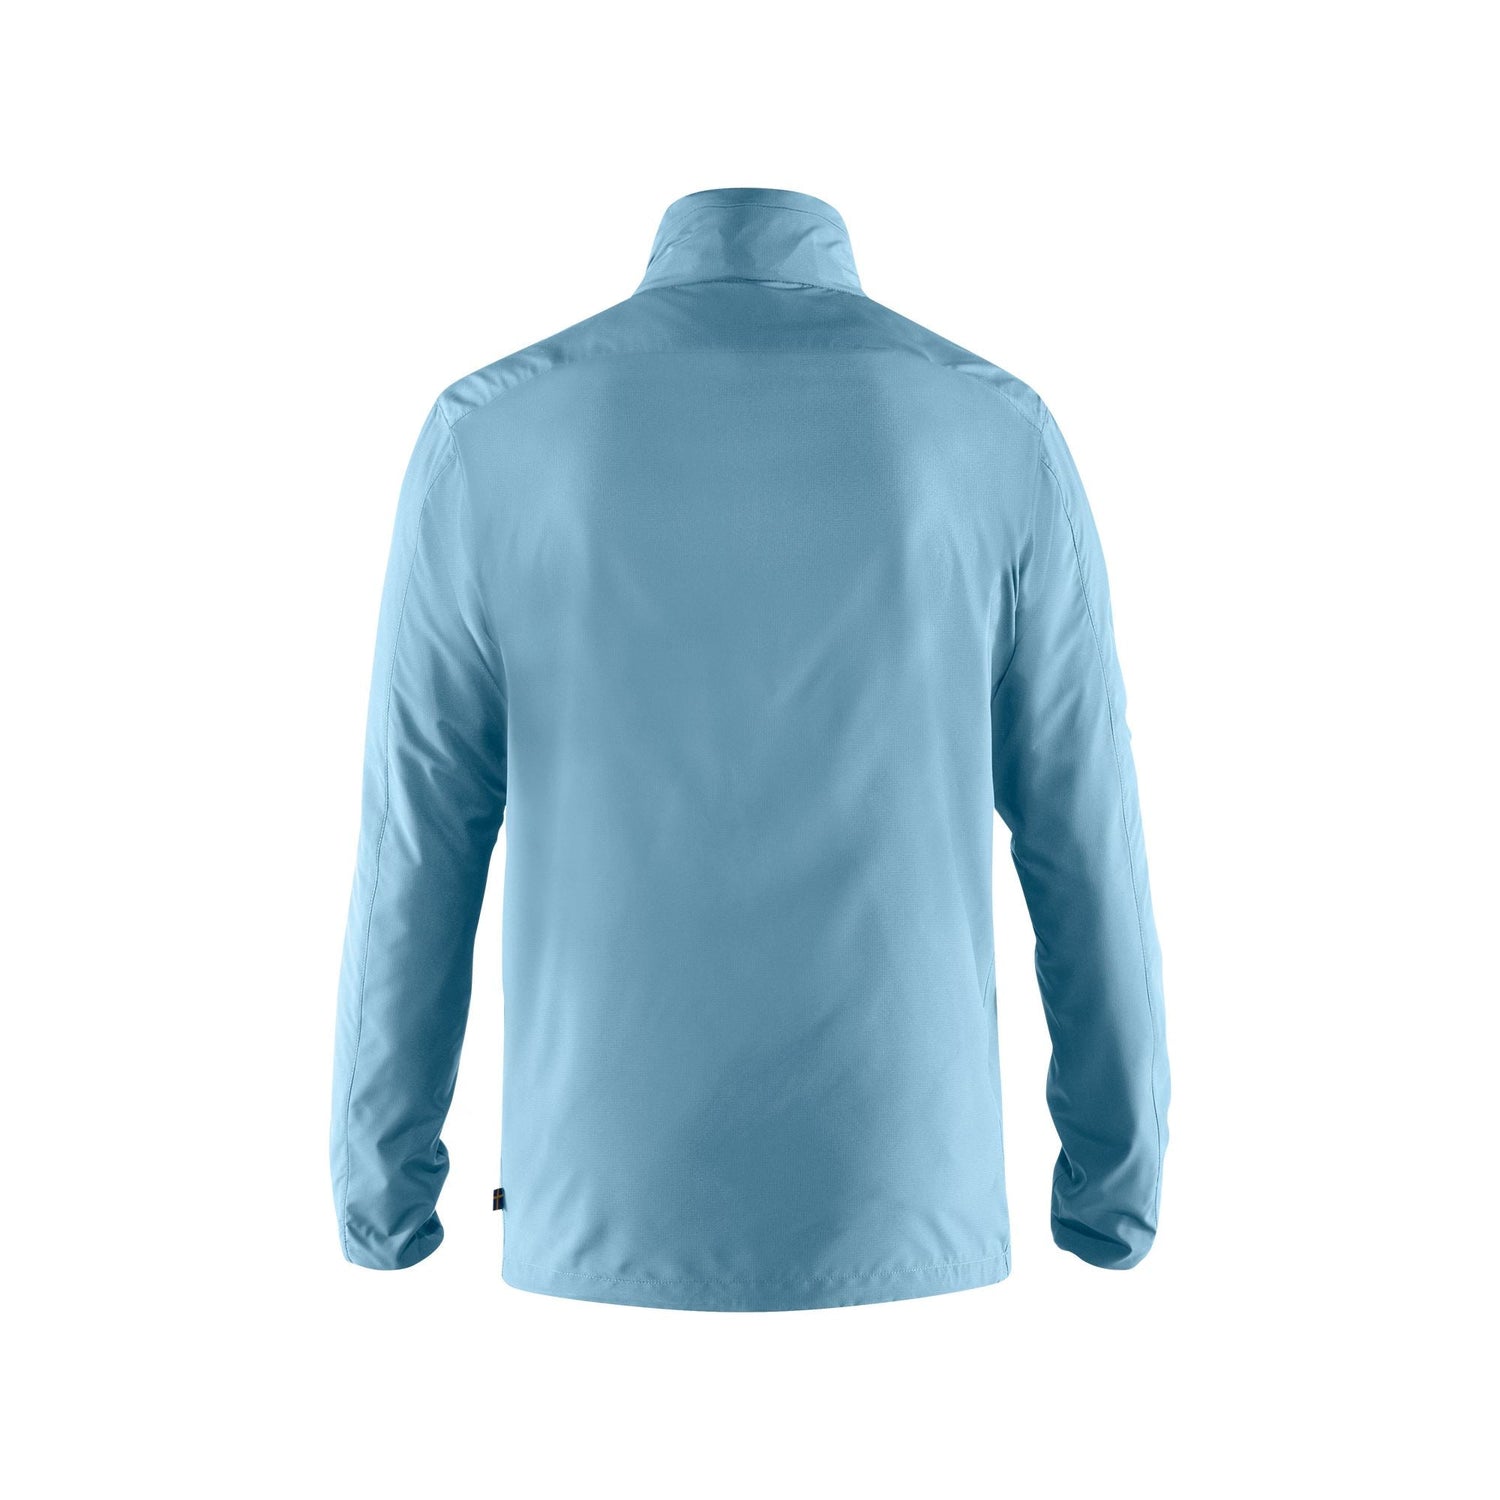 Fjällräven - M's High Coast Lite Jacket - Recycled polyester - Weekendbee - sustainable sportswear